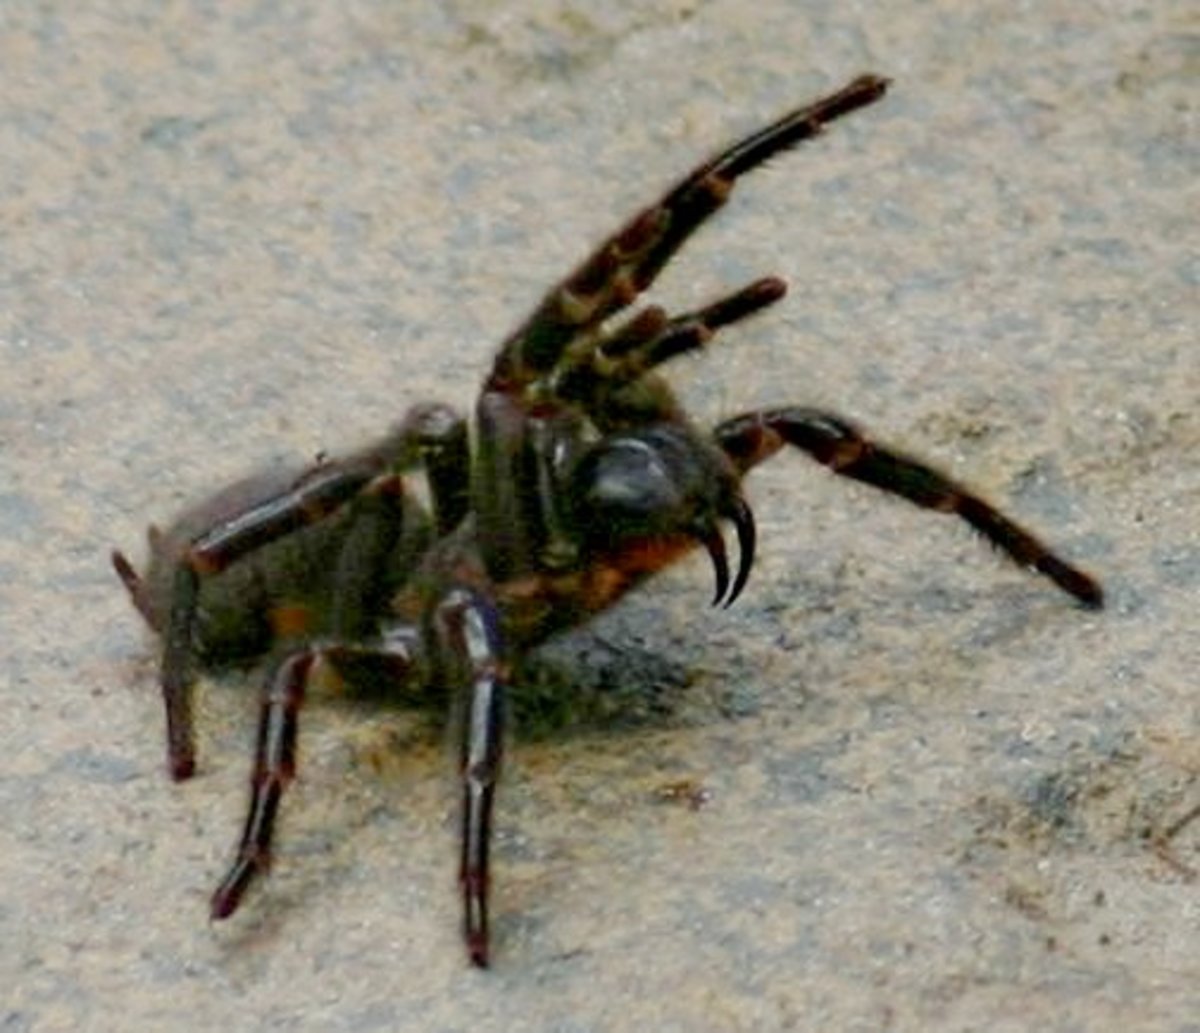 The dangerous Sydney Funnel-Web Spider.